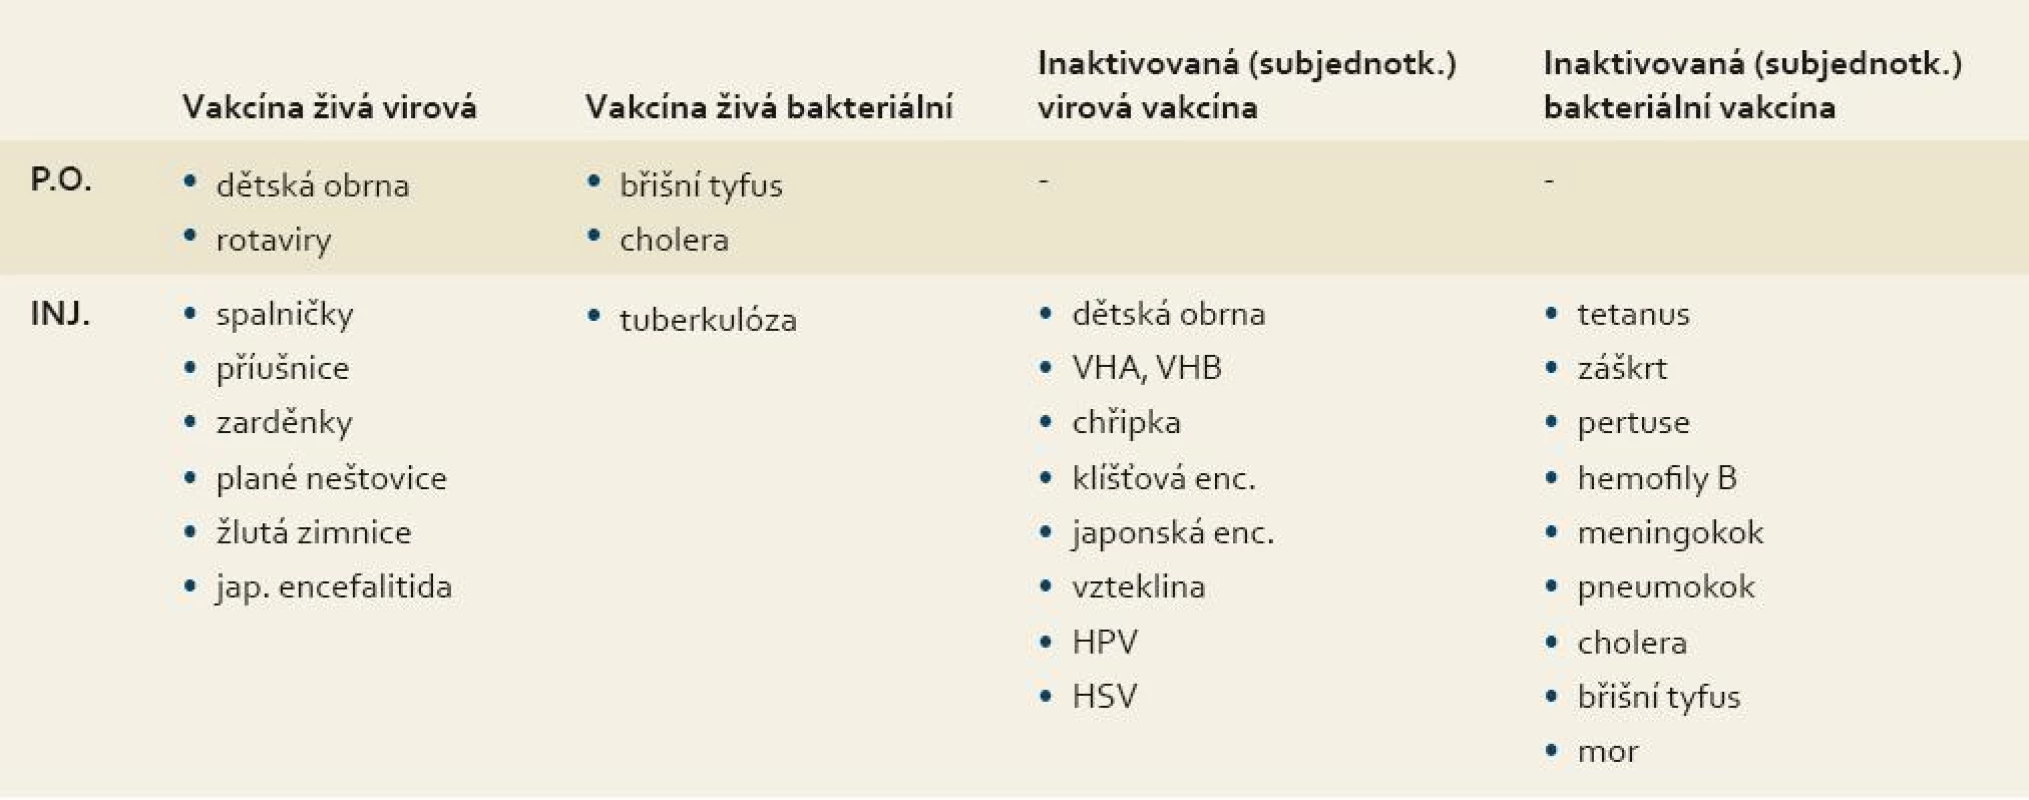 Typy očkovacích látek.
Tab. 2. Types of vaccines.